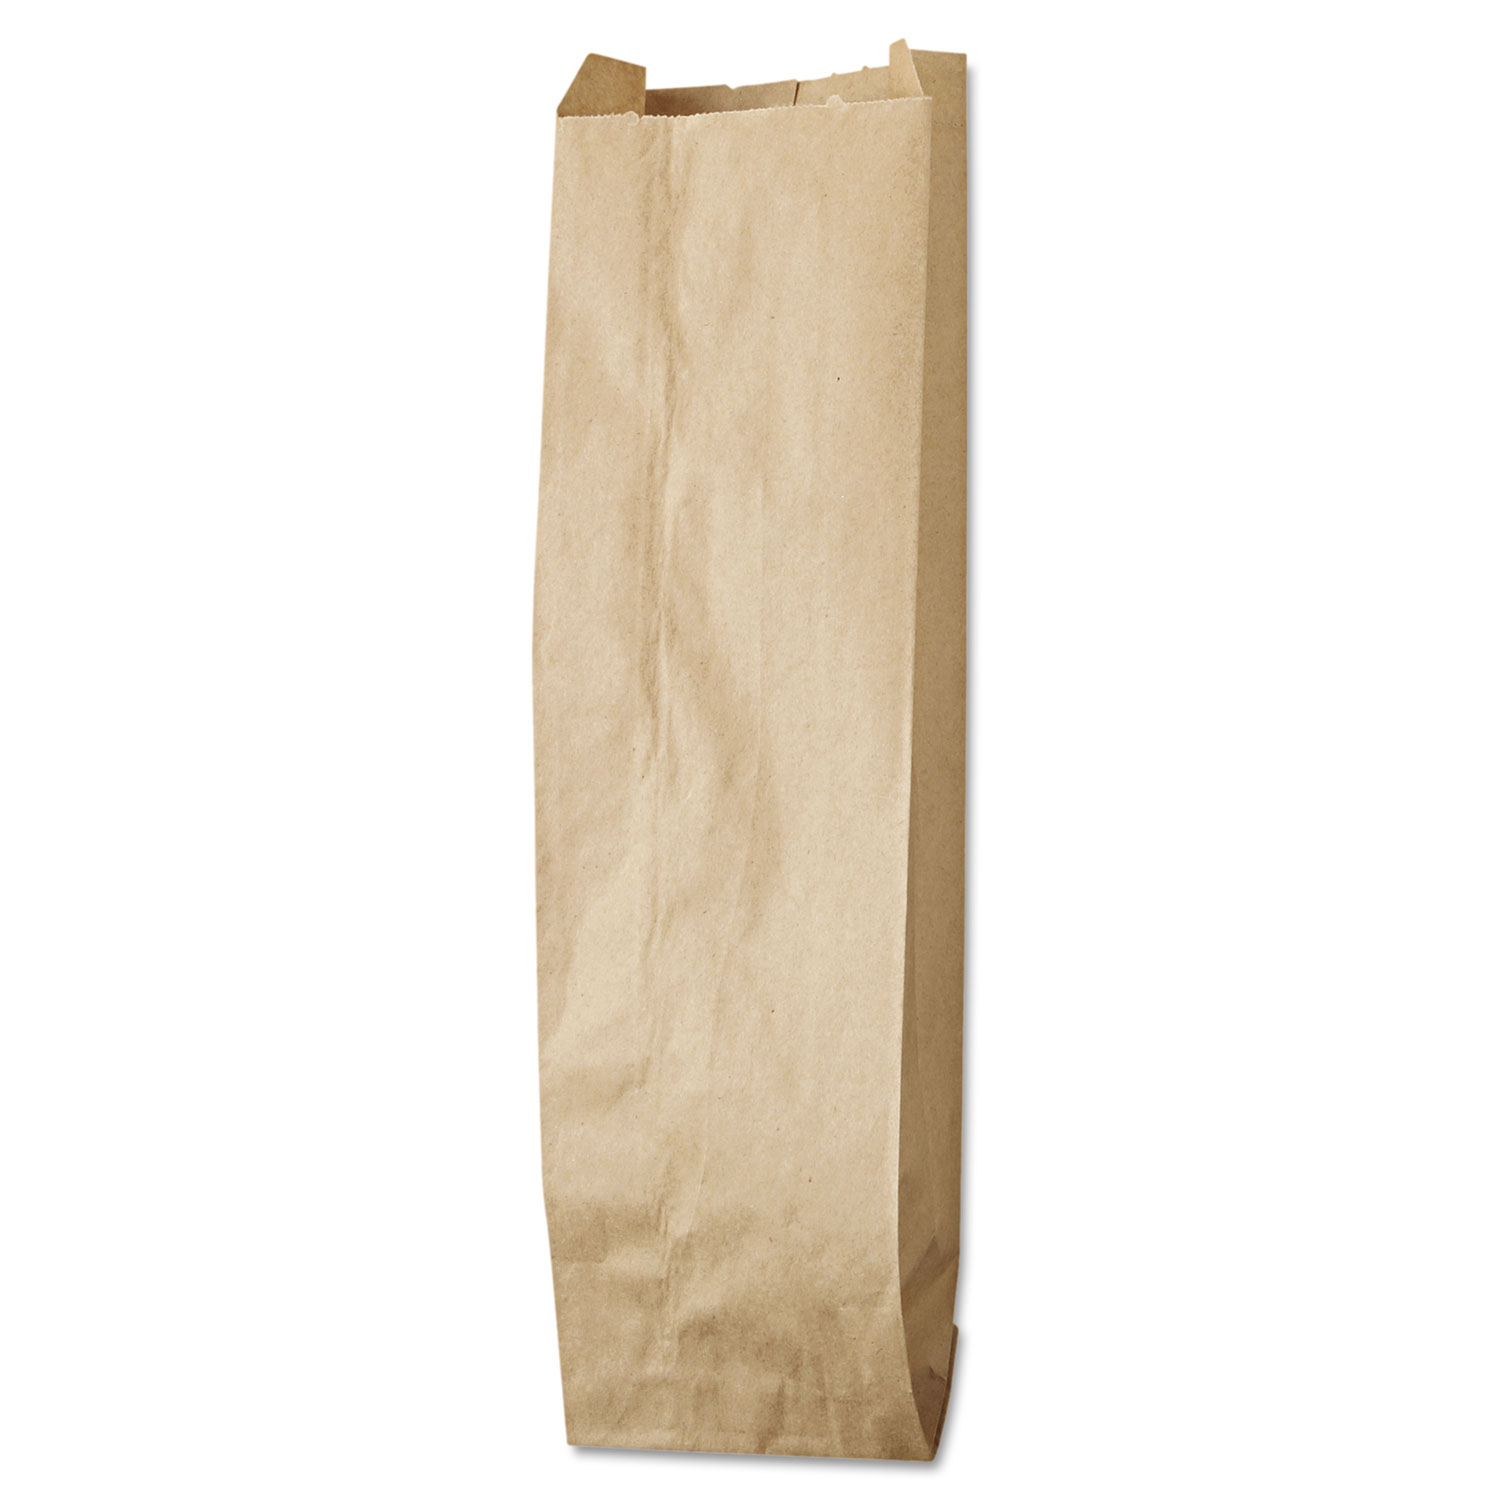  General 40036 Liquor-Takeout Quart-Sized Paper Bags, 35 lbs Capacity, Quart, 4.25w x 2.5d x 16h, Kraft, 500 Bags (BAGLQQUART500) 